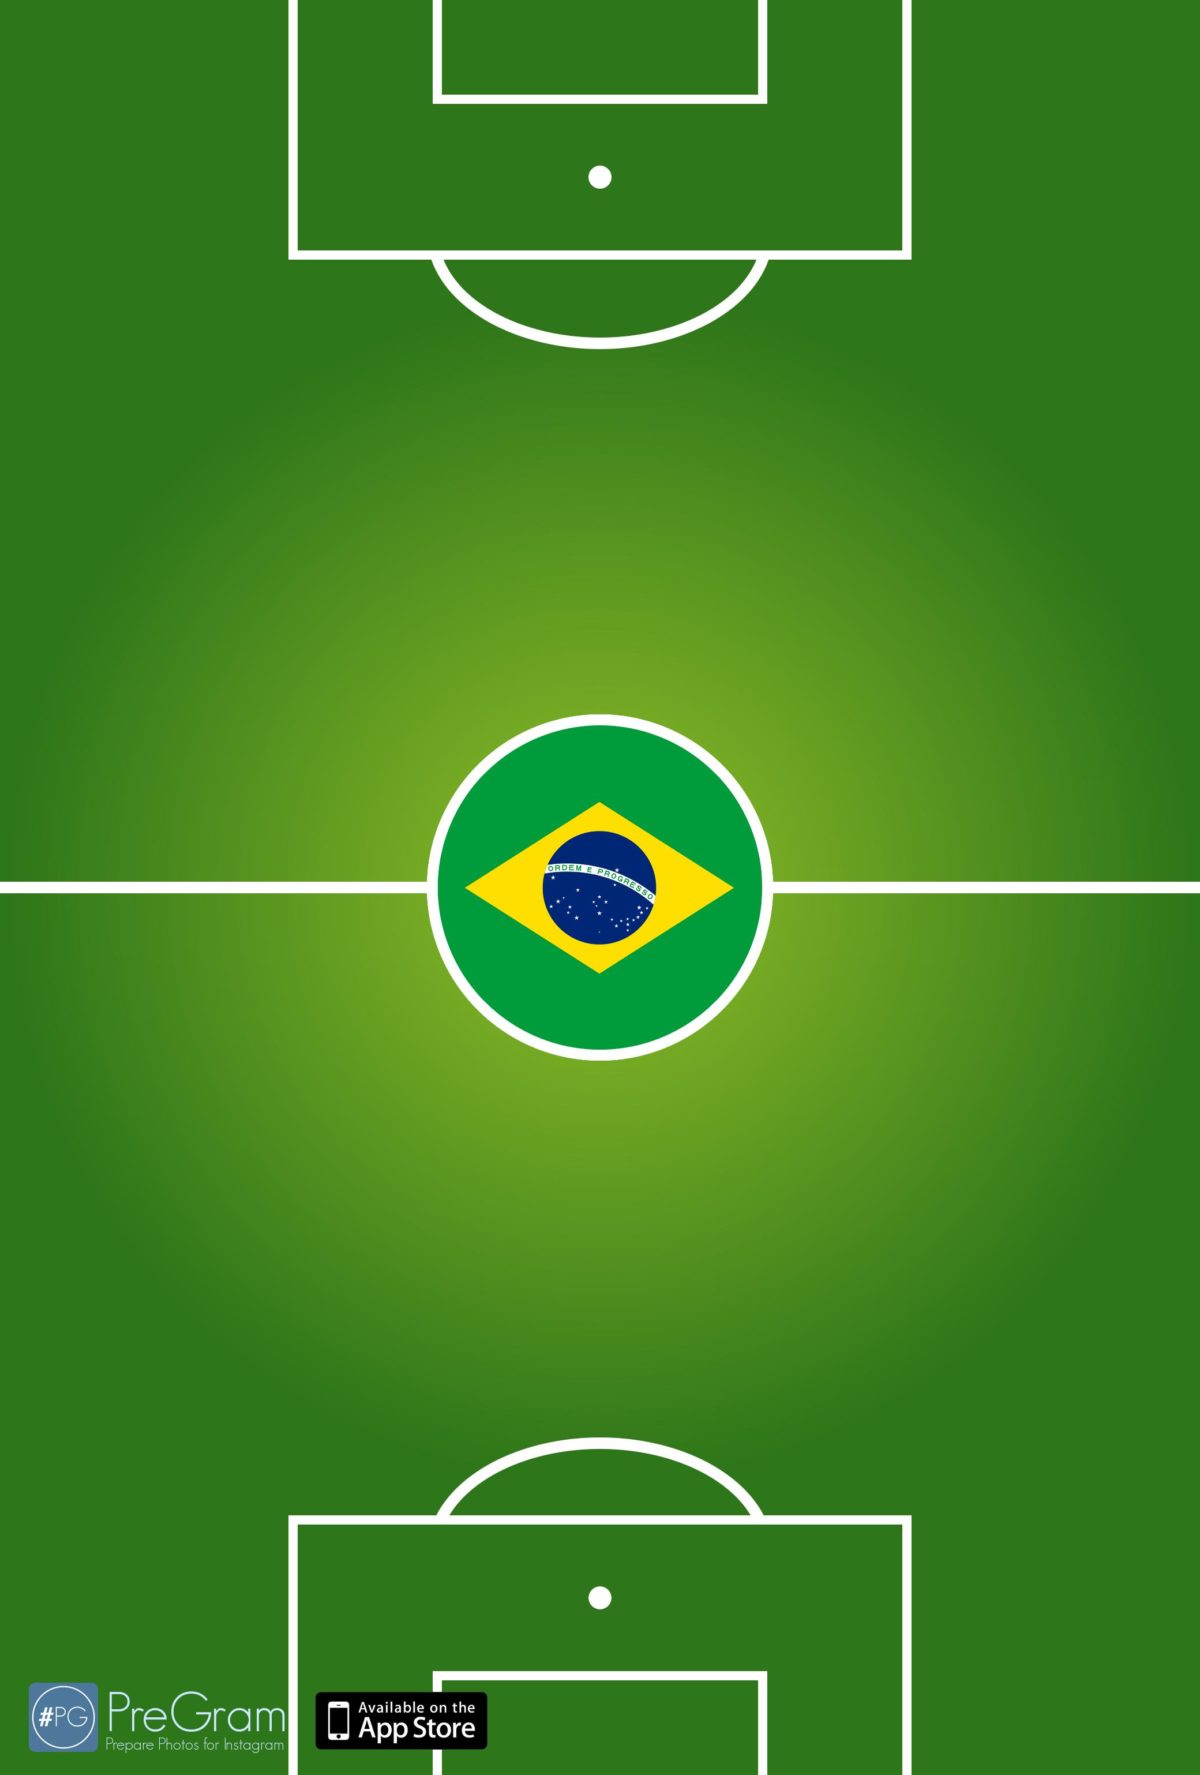 Worldcup 2014 Brazil: iPhone Wallpaper | PreGram